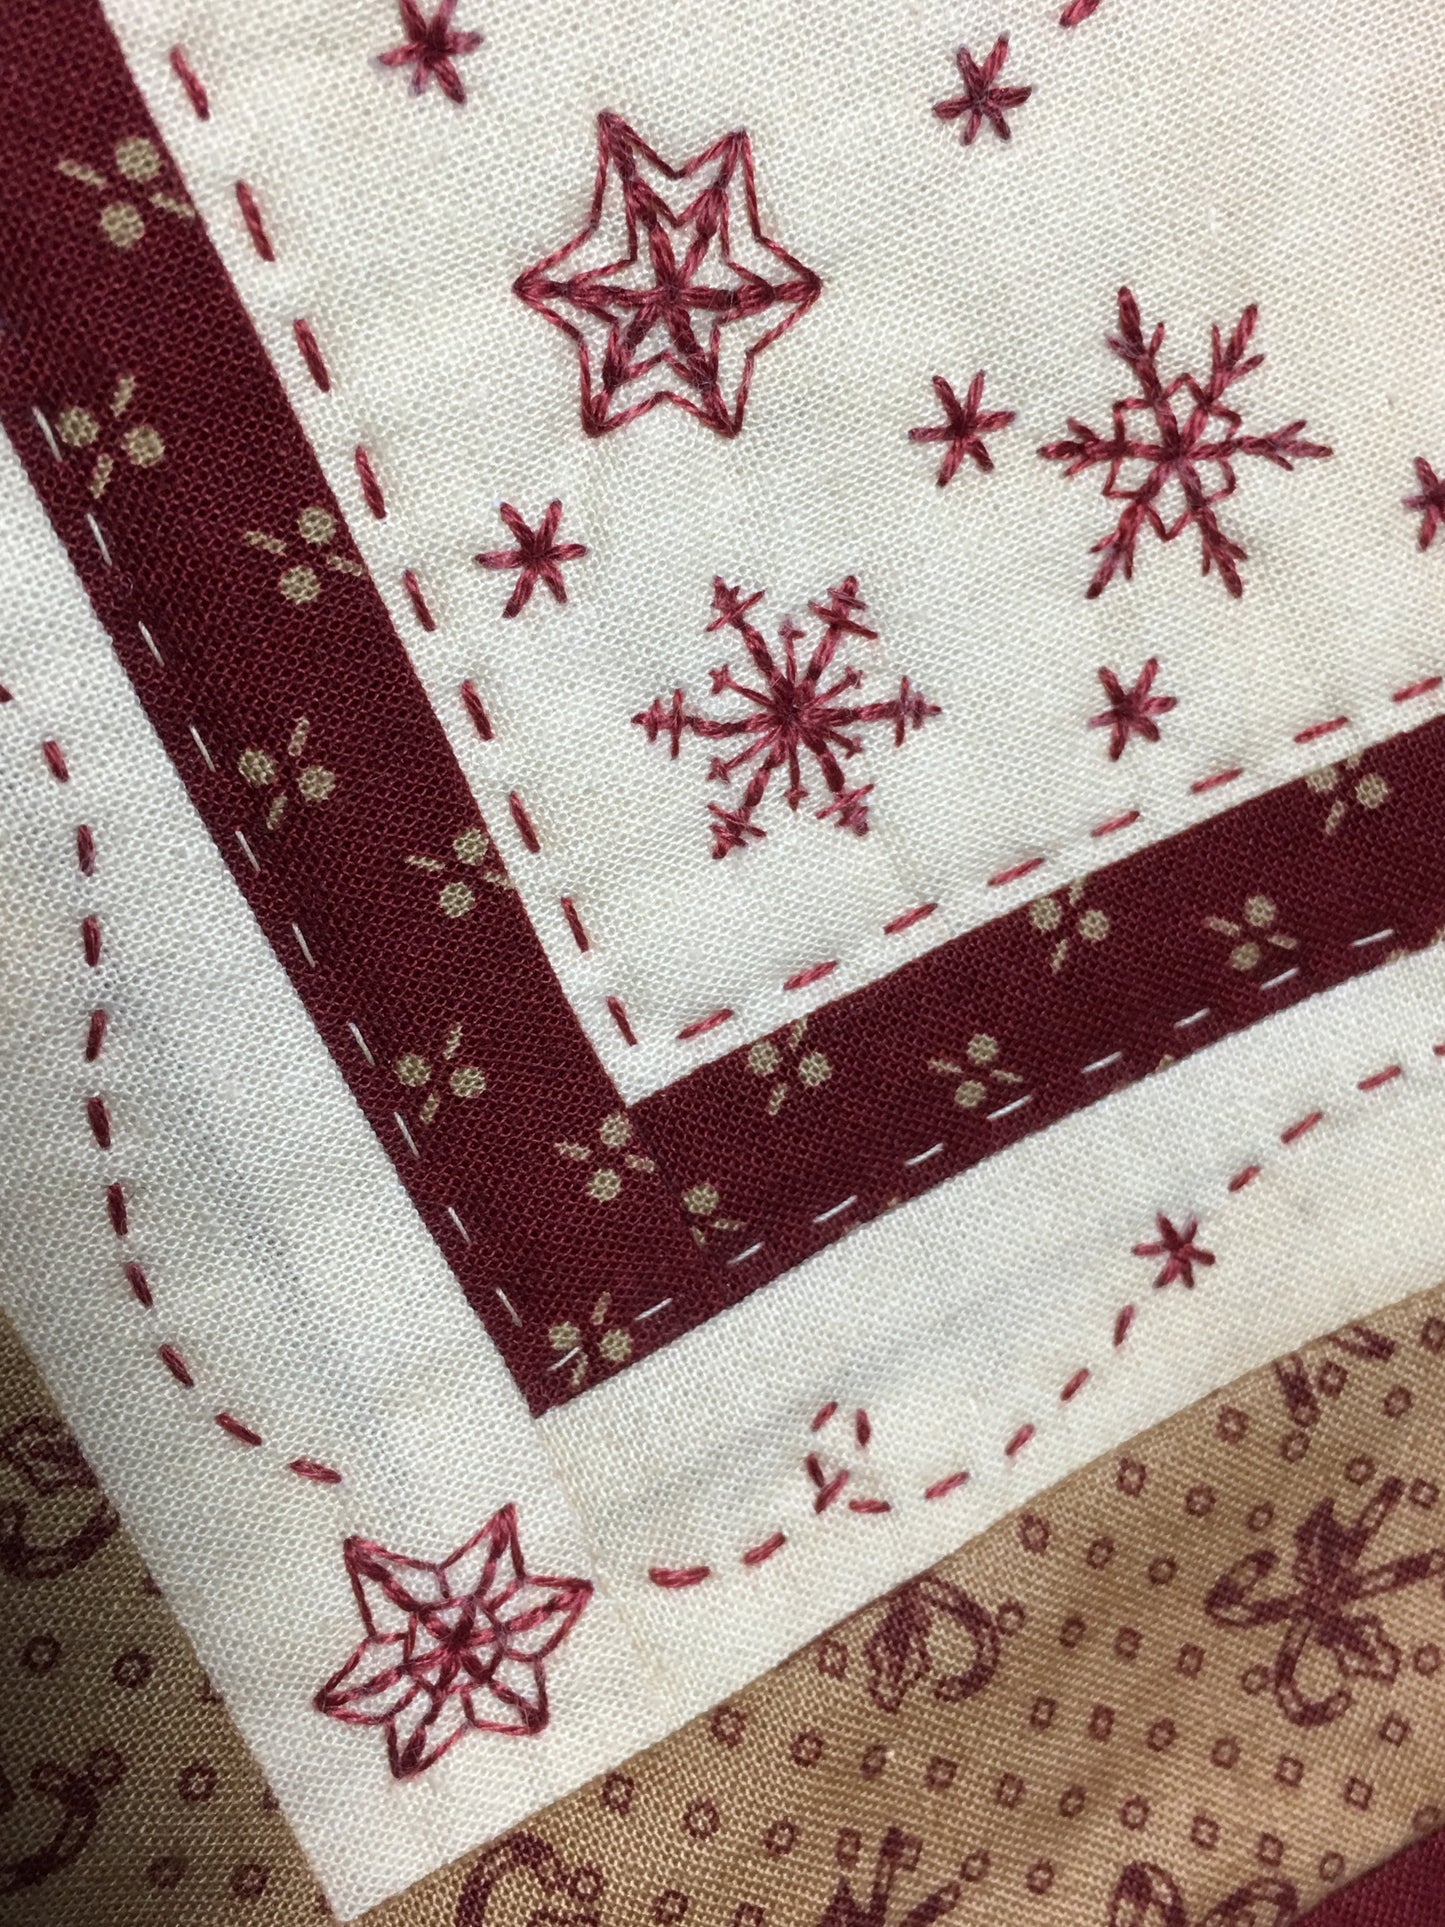 Pattern #045 - First Snow